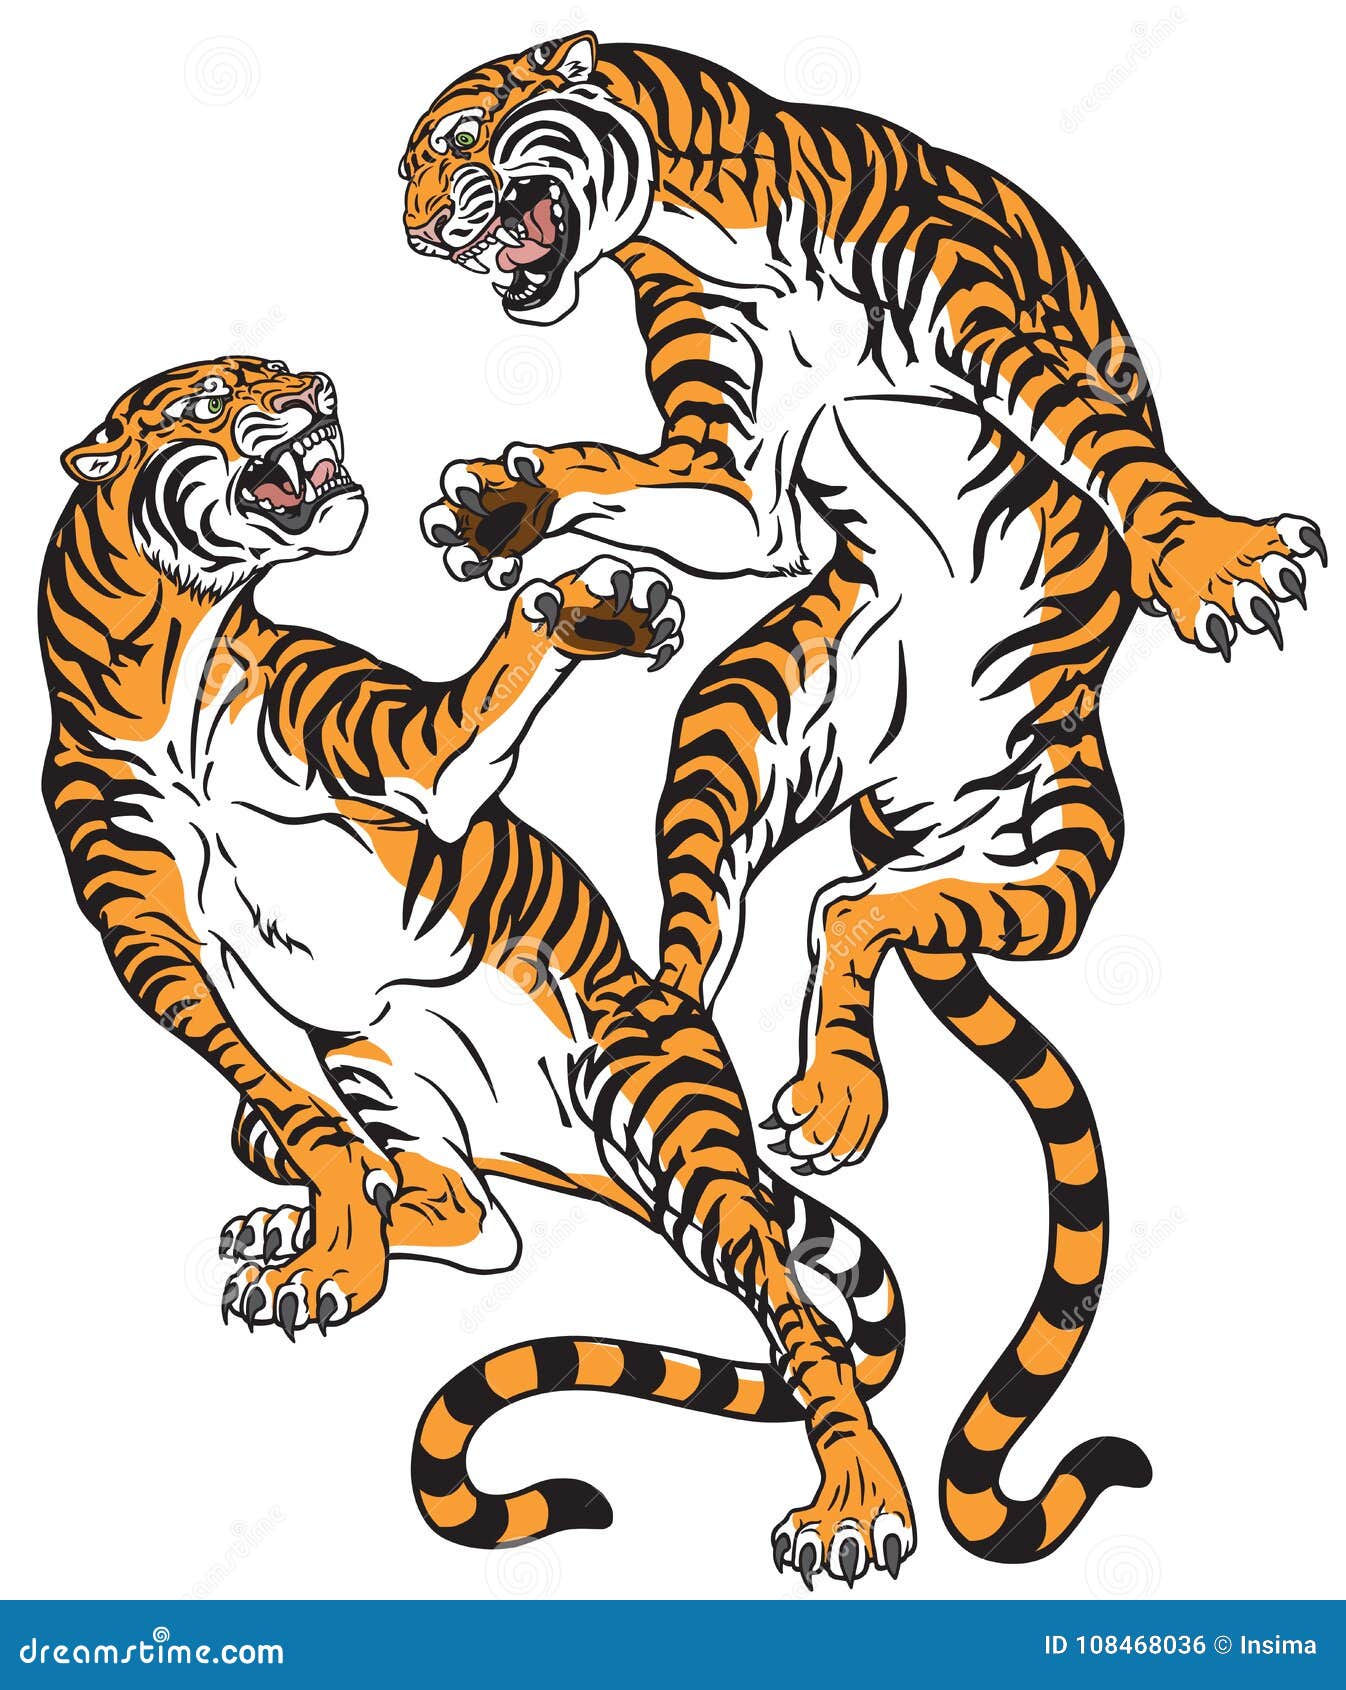 pair of fighting tigers tattoo